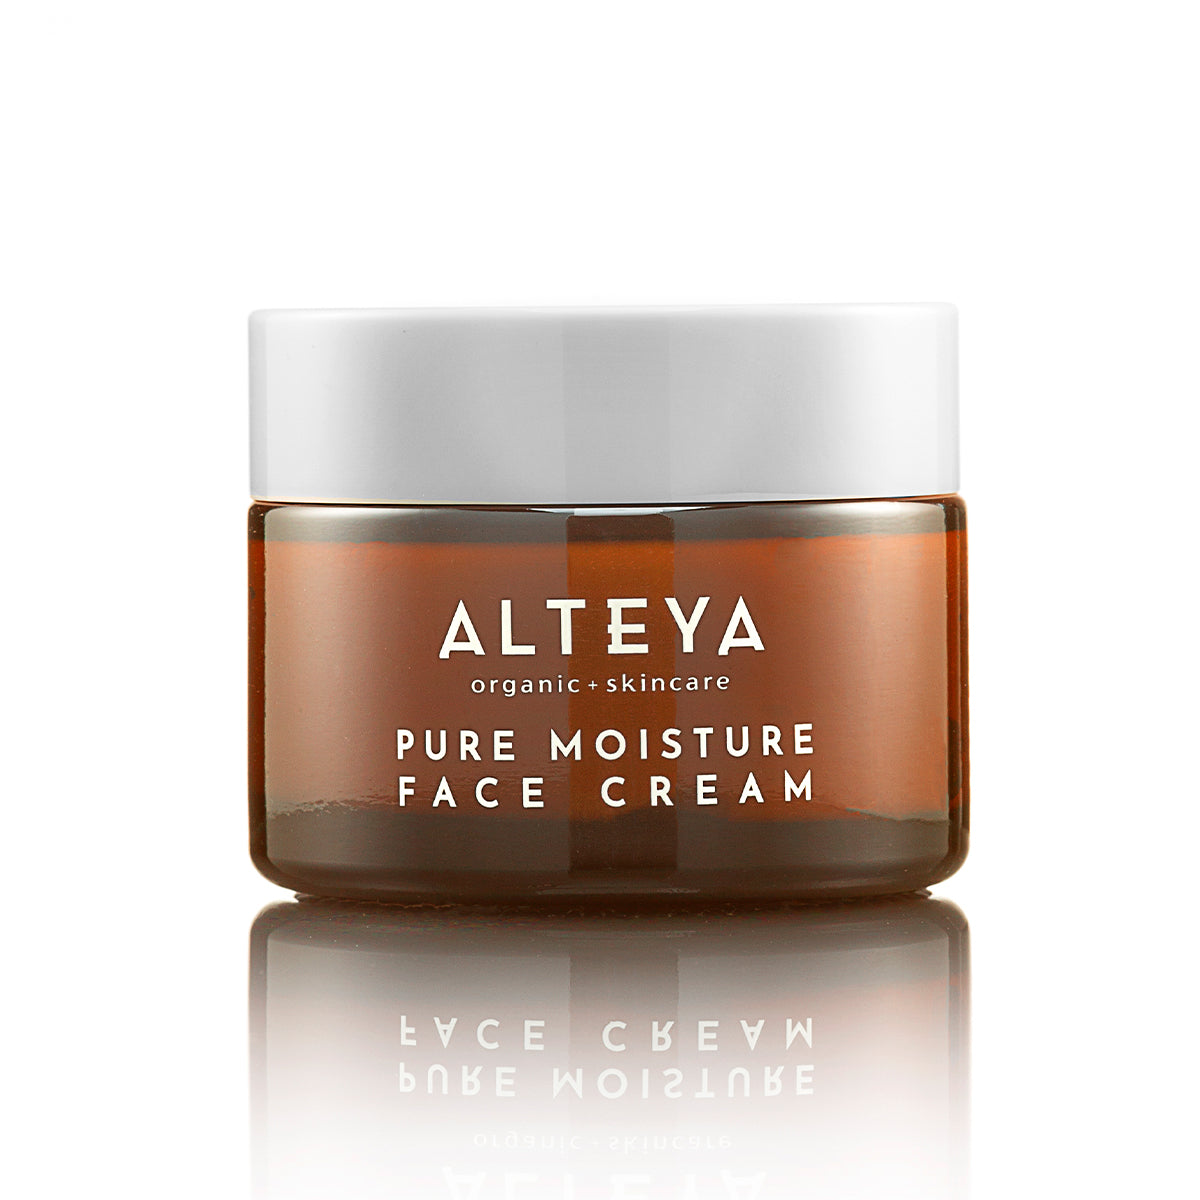 Alteya Organics Pure Moisture Face Cream Luminous Rose provides intense hydration and restores elasticity to the skin.